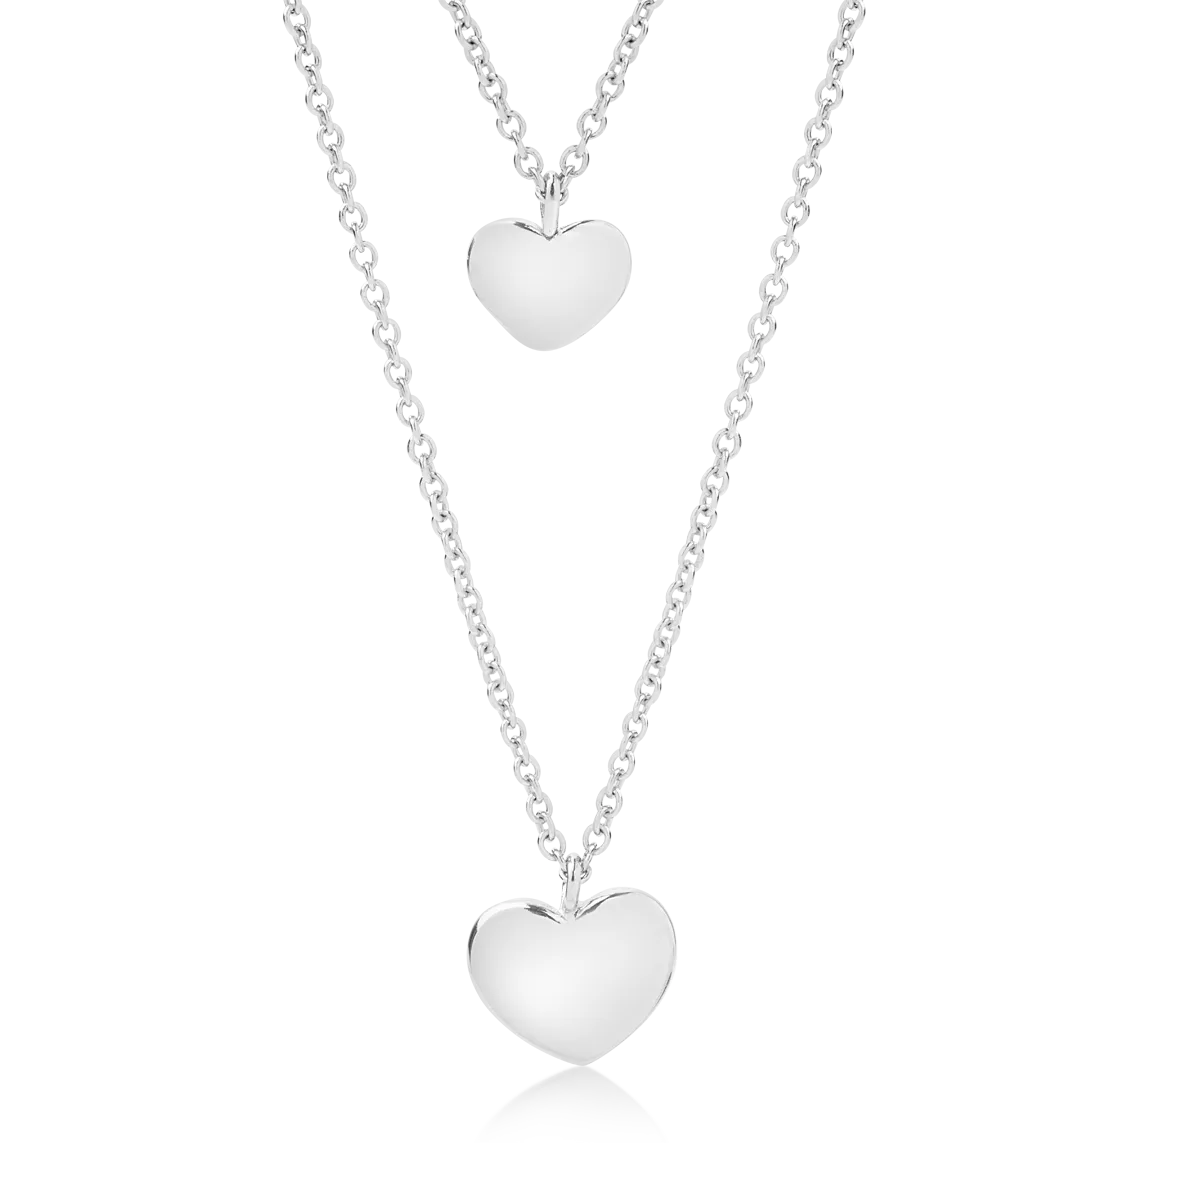 14K white gold hearts pendant necklace